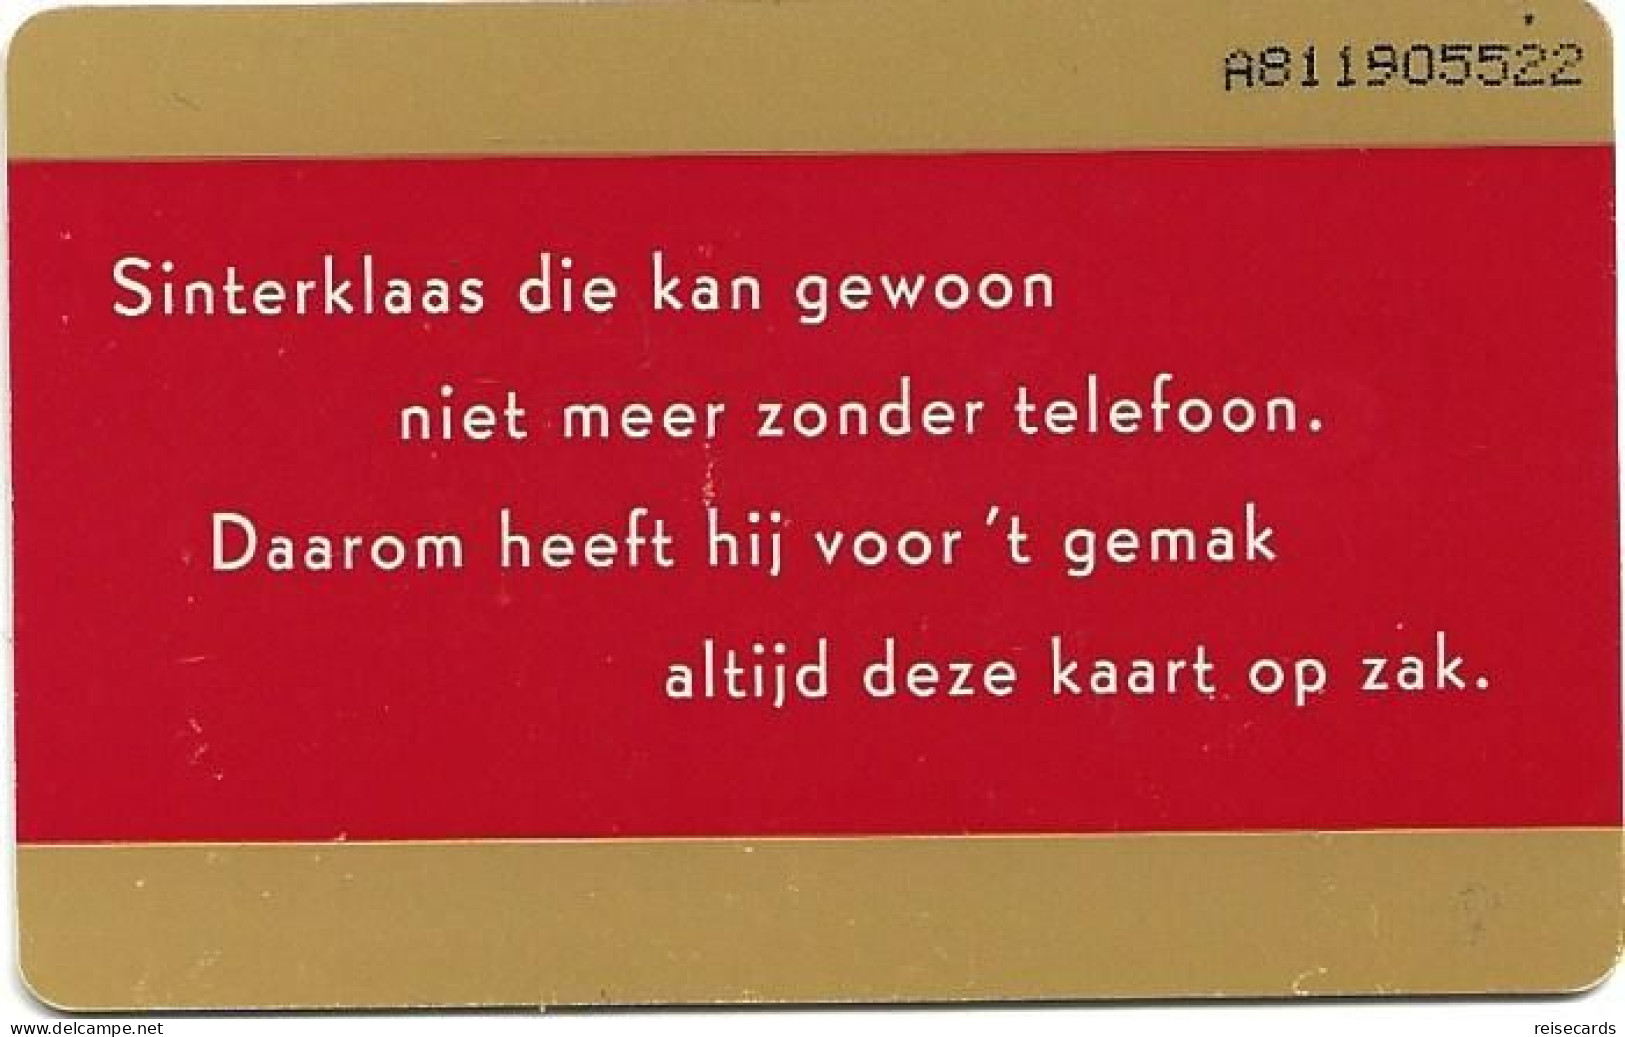 Netherlands: Ptt Telecom - 1996 Sinterklaas - Openbaar